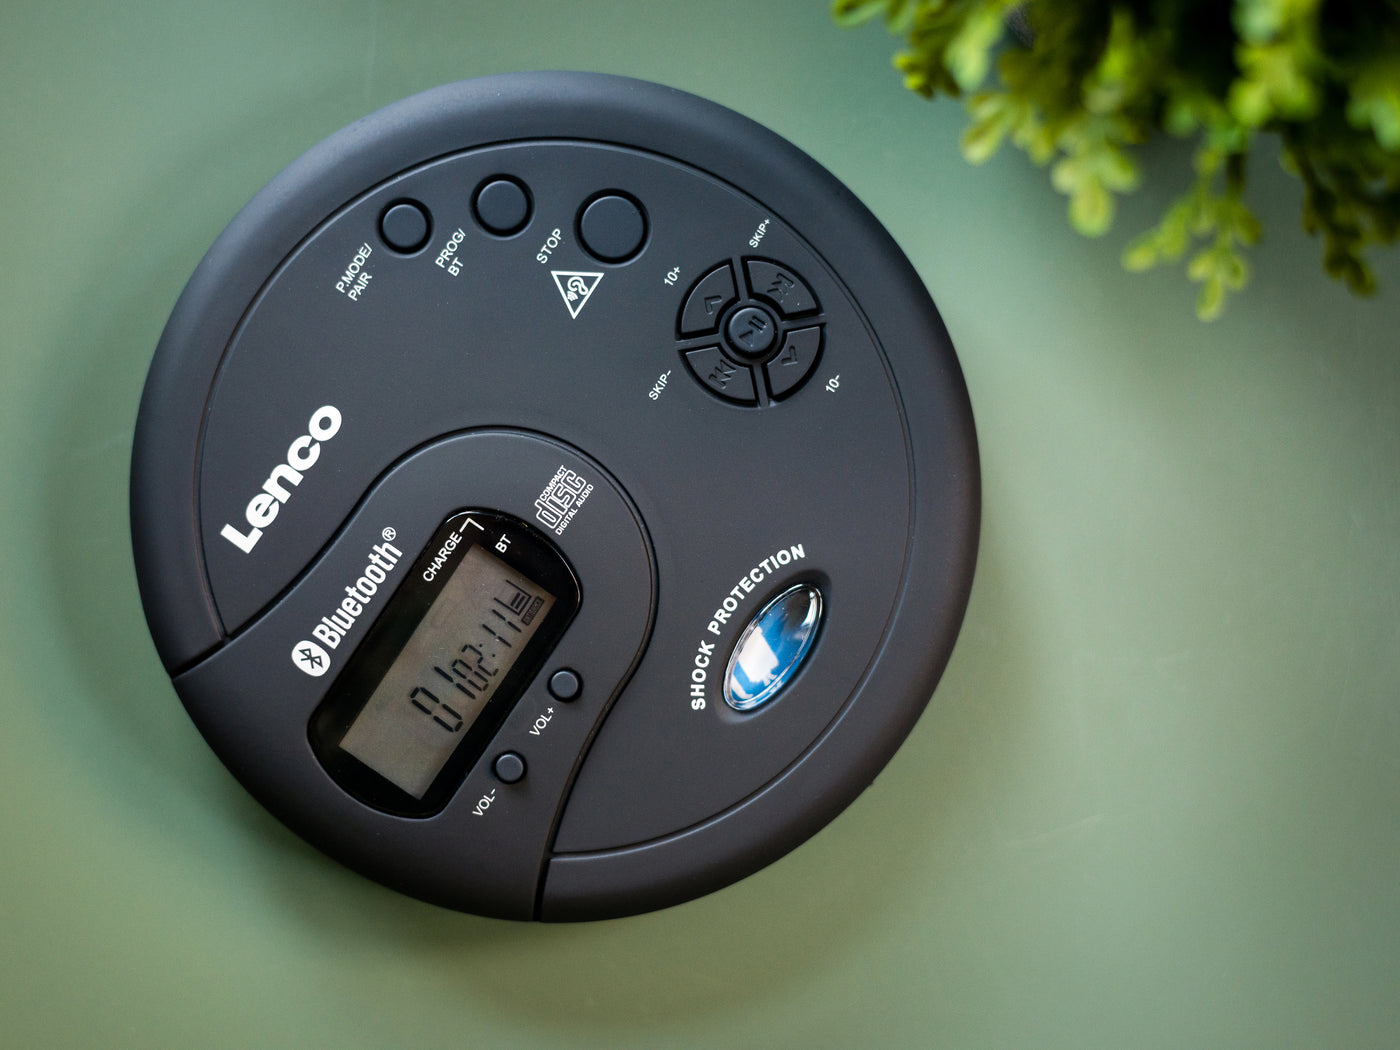 Lenco CD-300BK Portable CD Player with Bluetooth